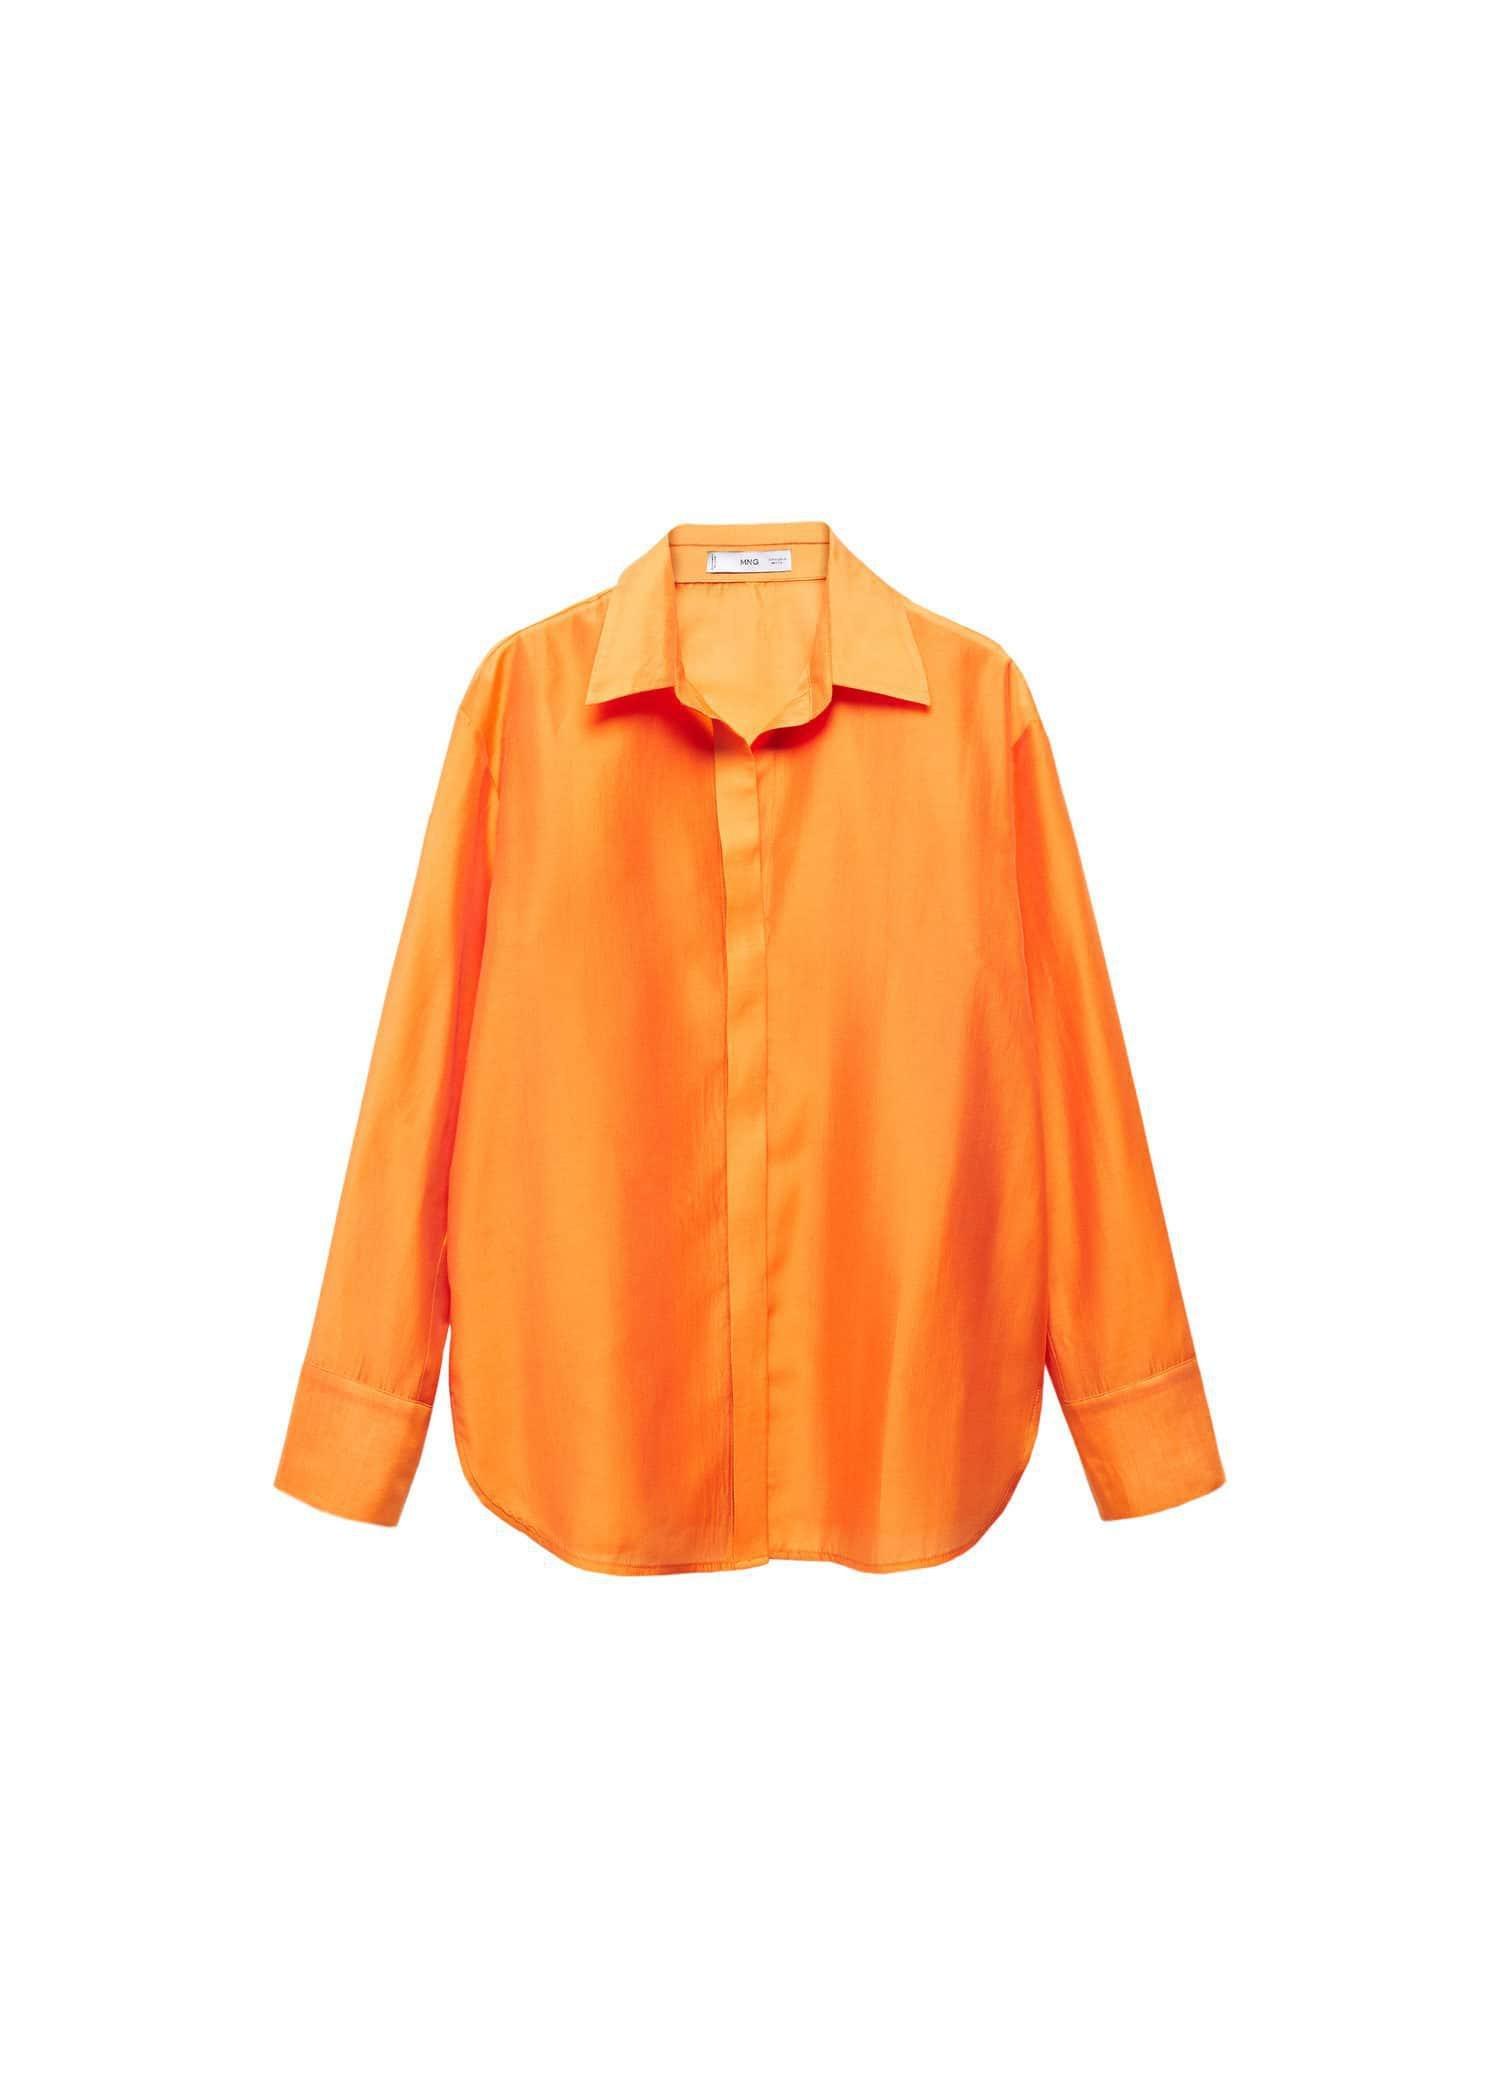 Mango - Orange Concealed Button Shirt